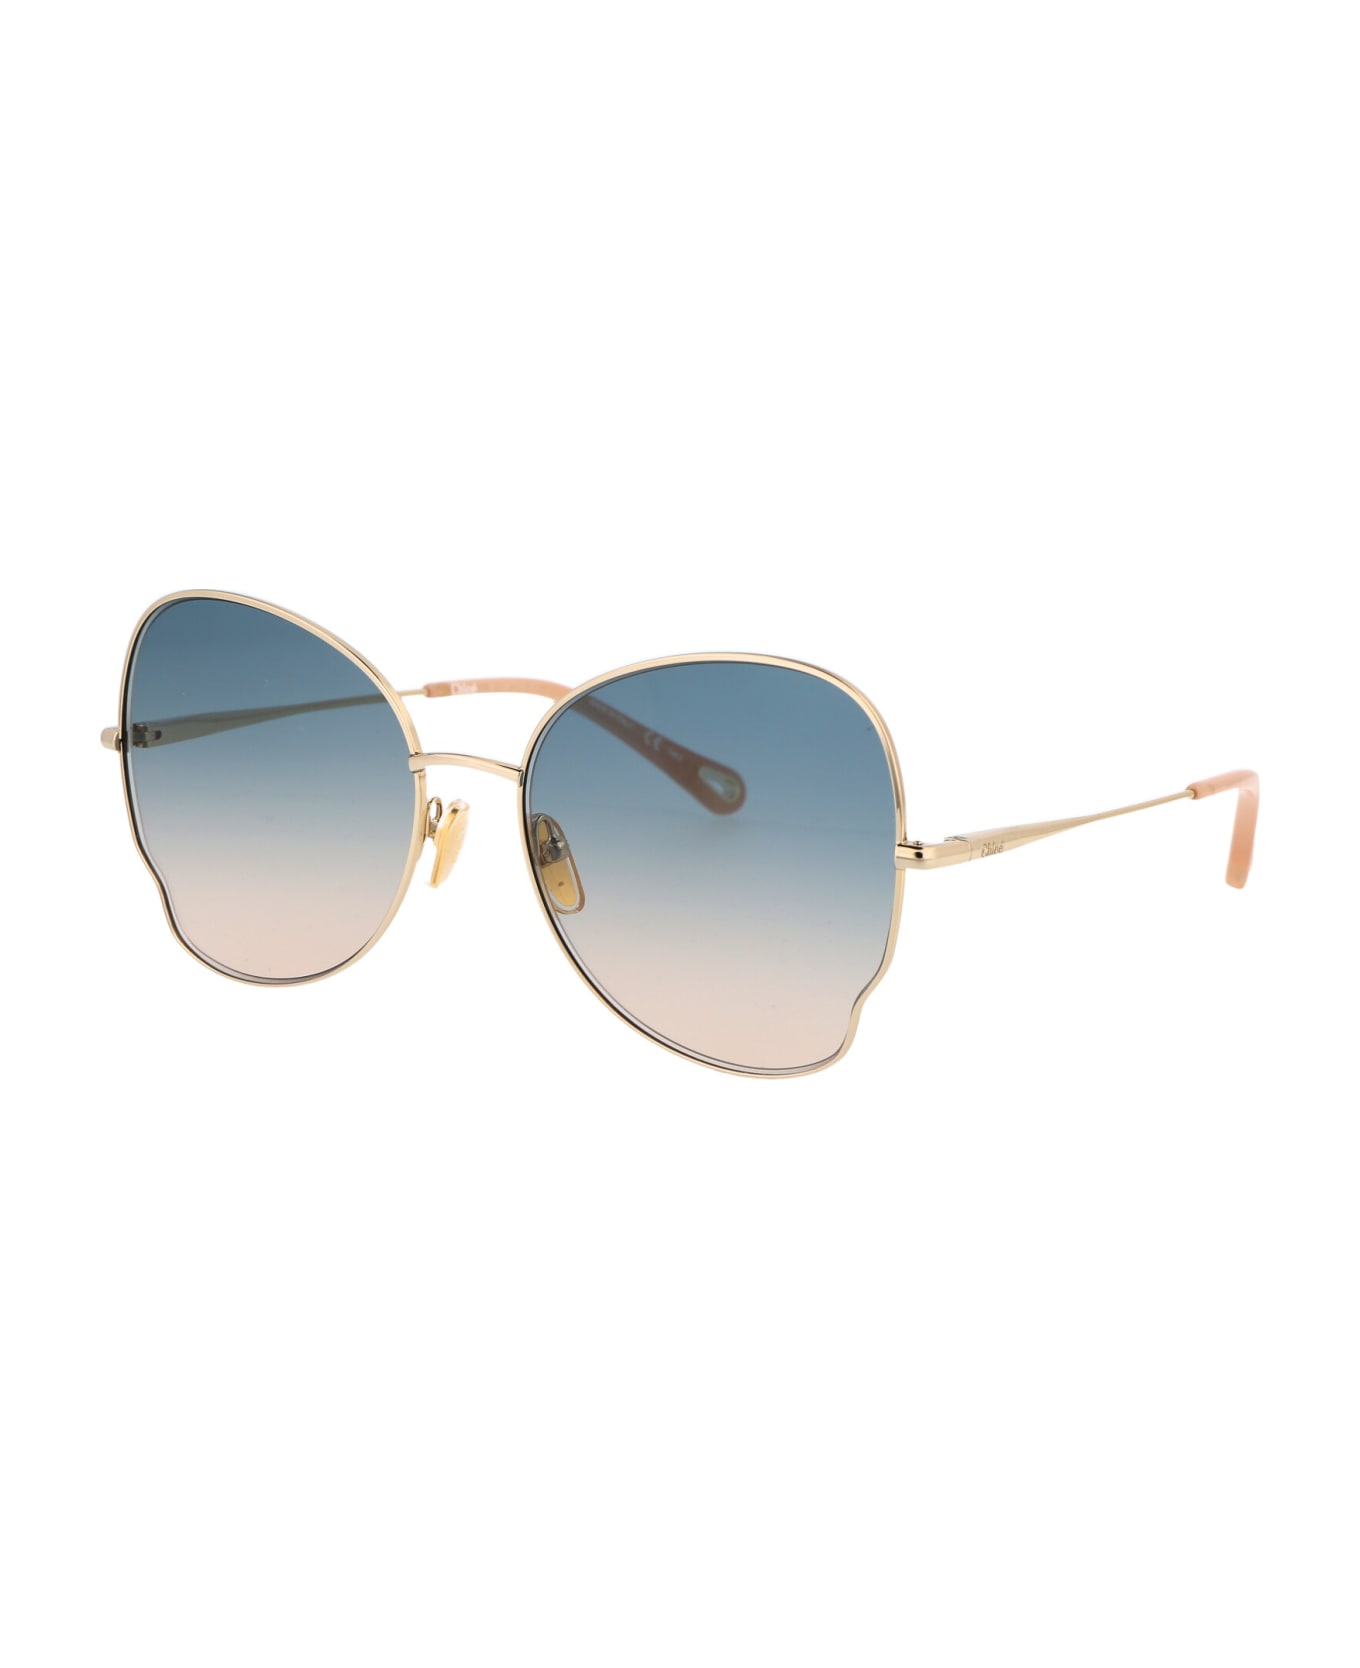 Chloé Eyewear Ch0094s Sunglasses - 003 GOLD GOLD GREEN